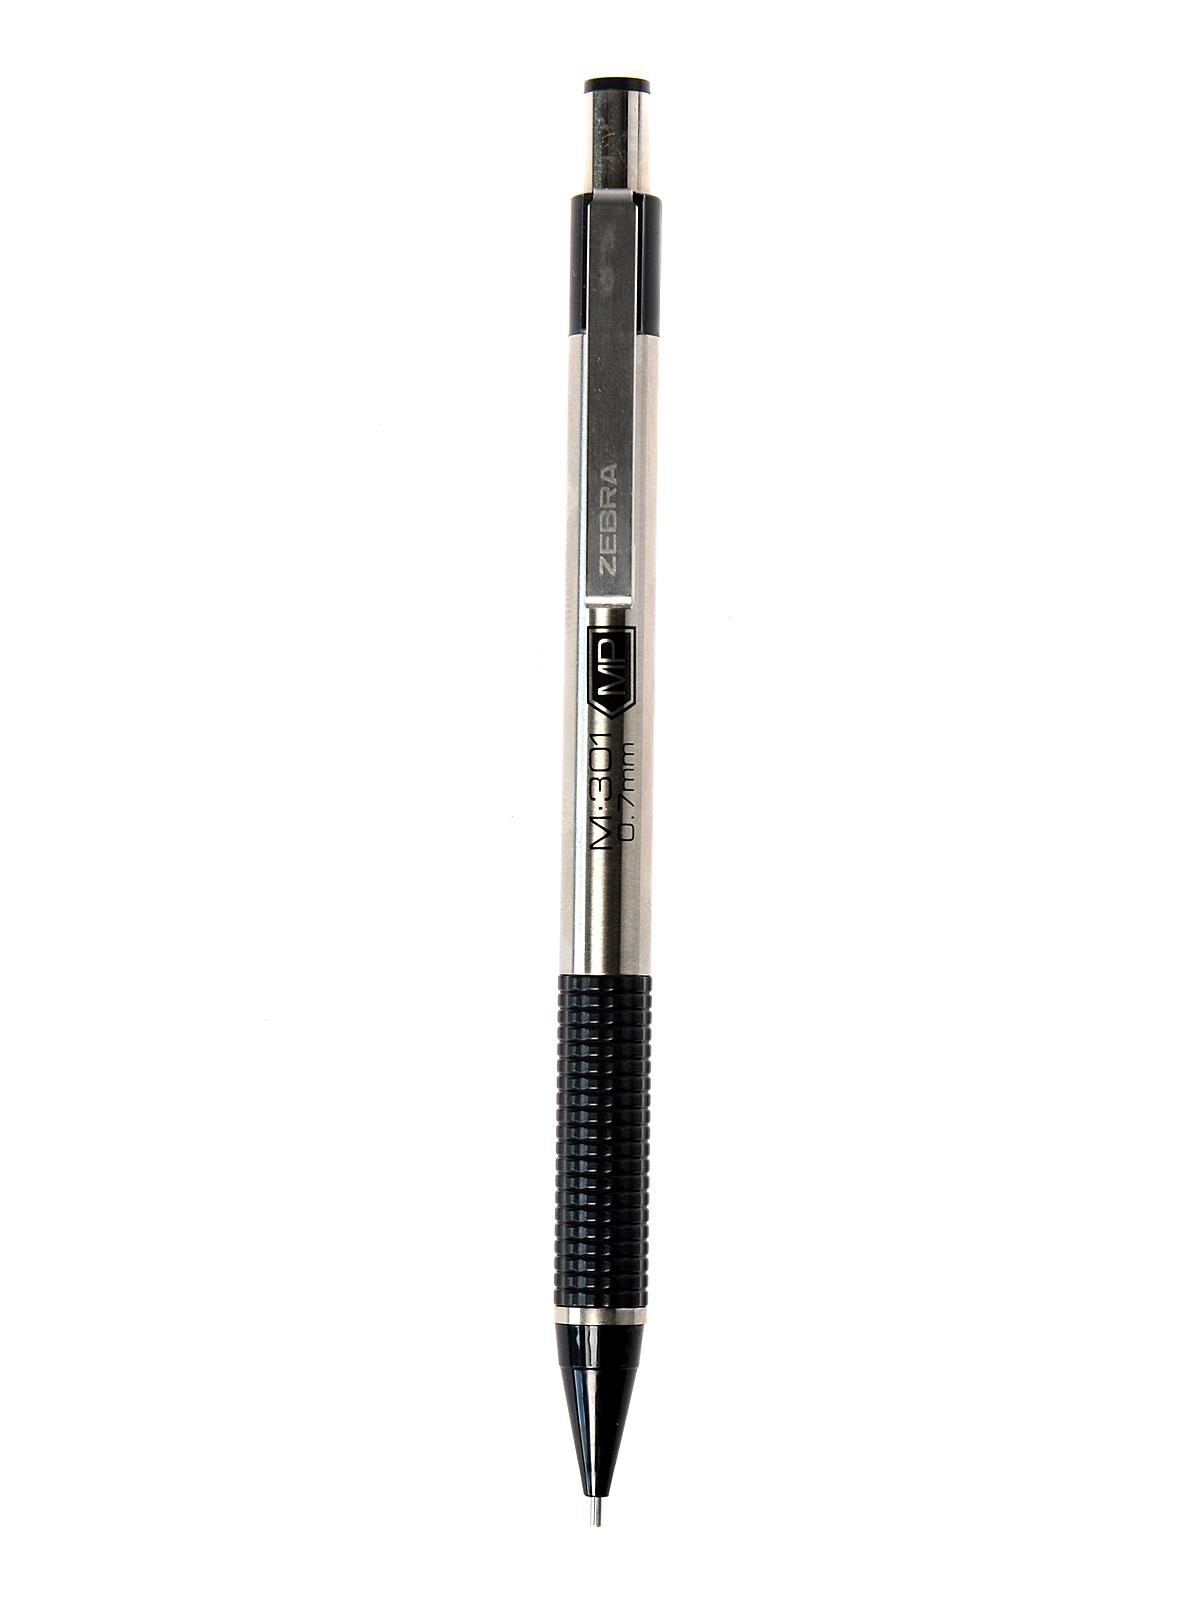 M-301 Mechanical Pencil 0.7 Mm Black